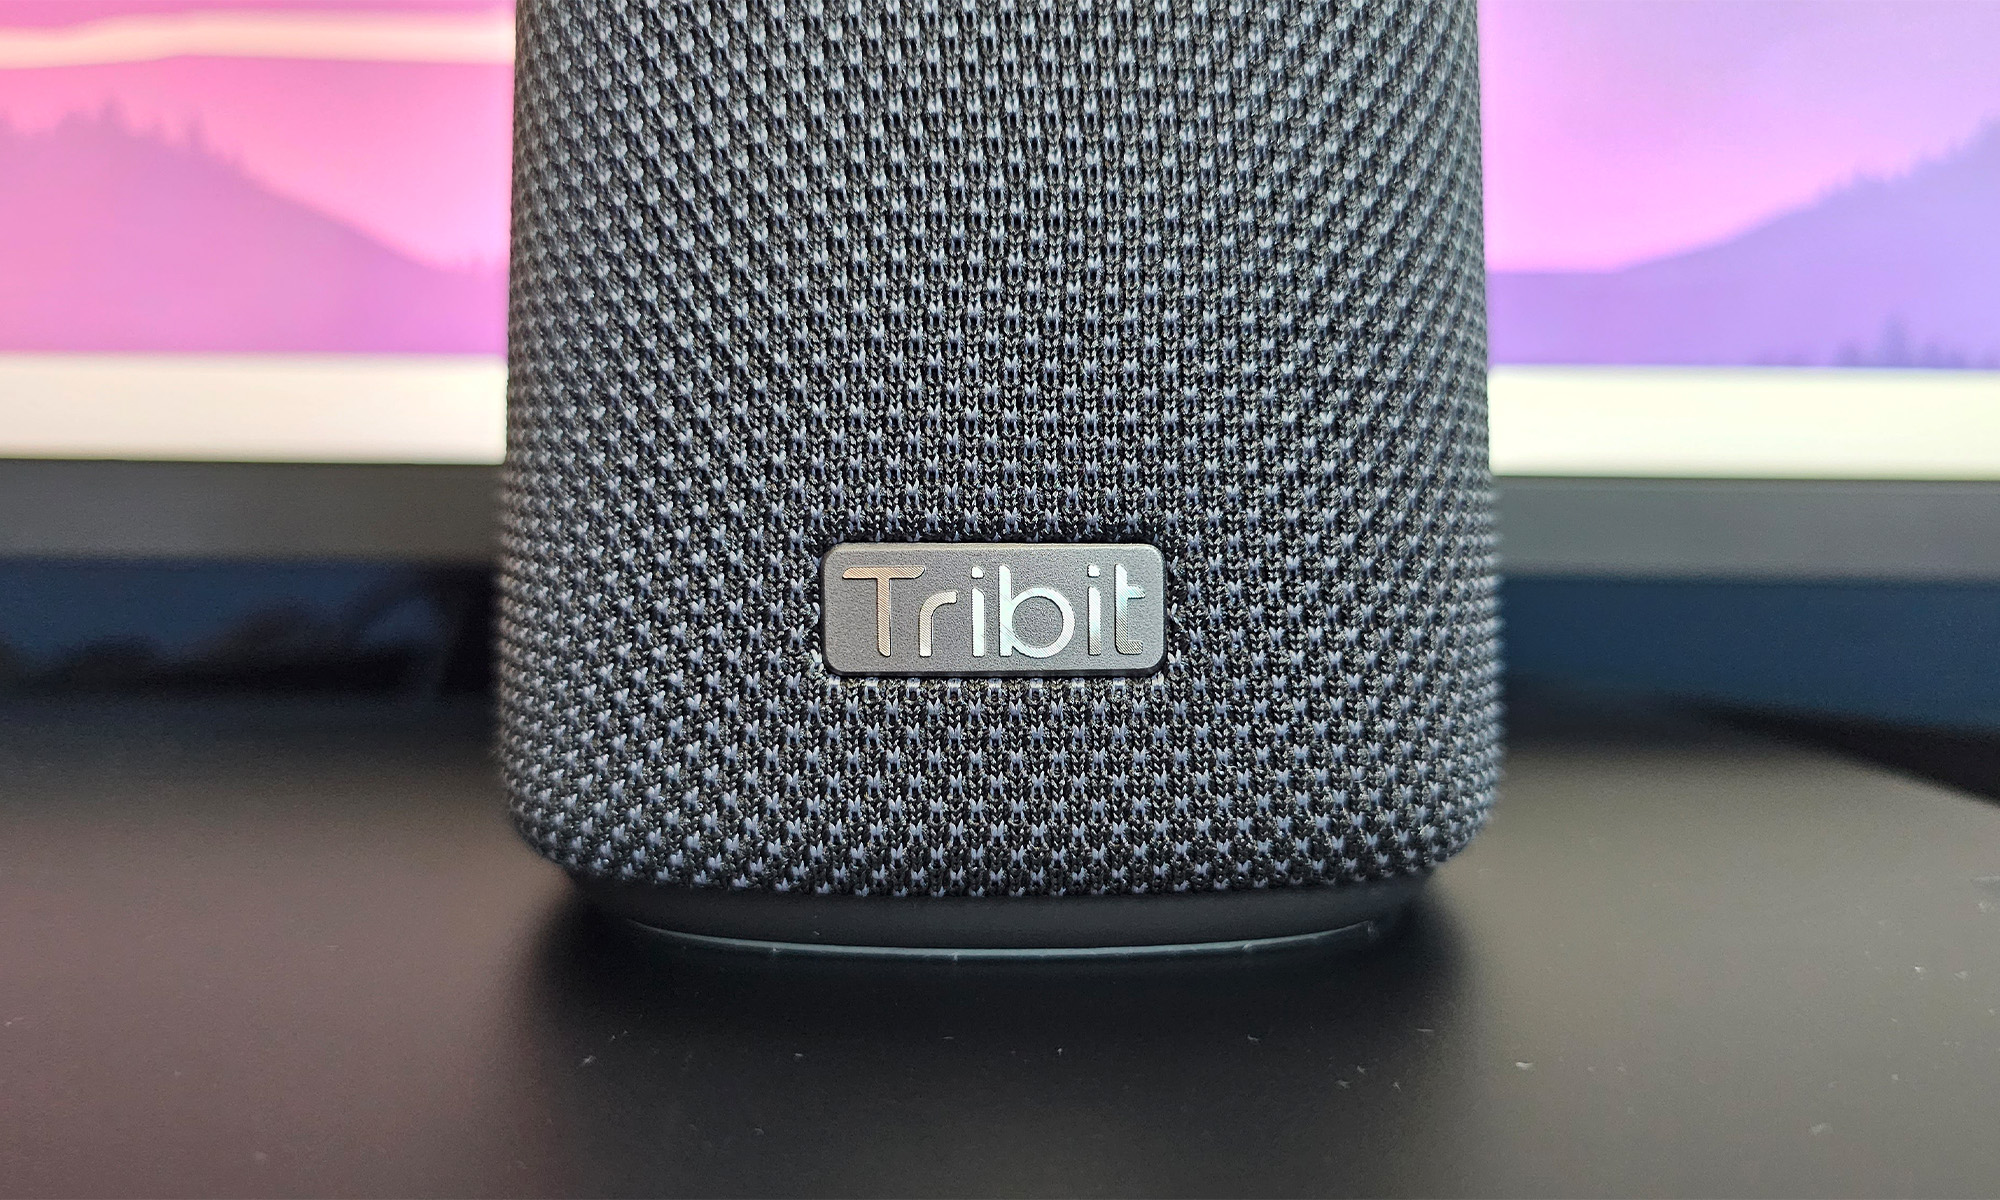 tribit stormbox pro portable speaker sound quality